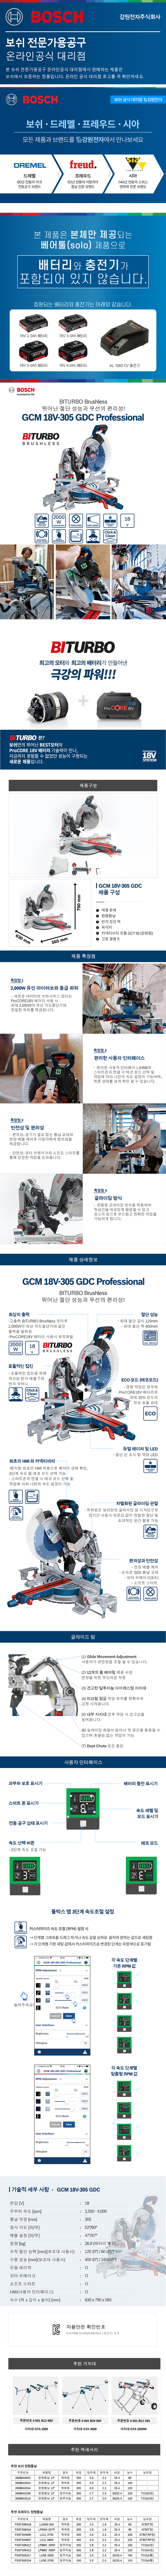 GCM_18V-305_GDC_solo_01.jpg